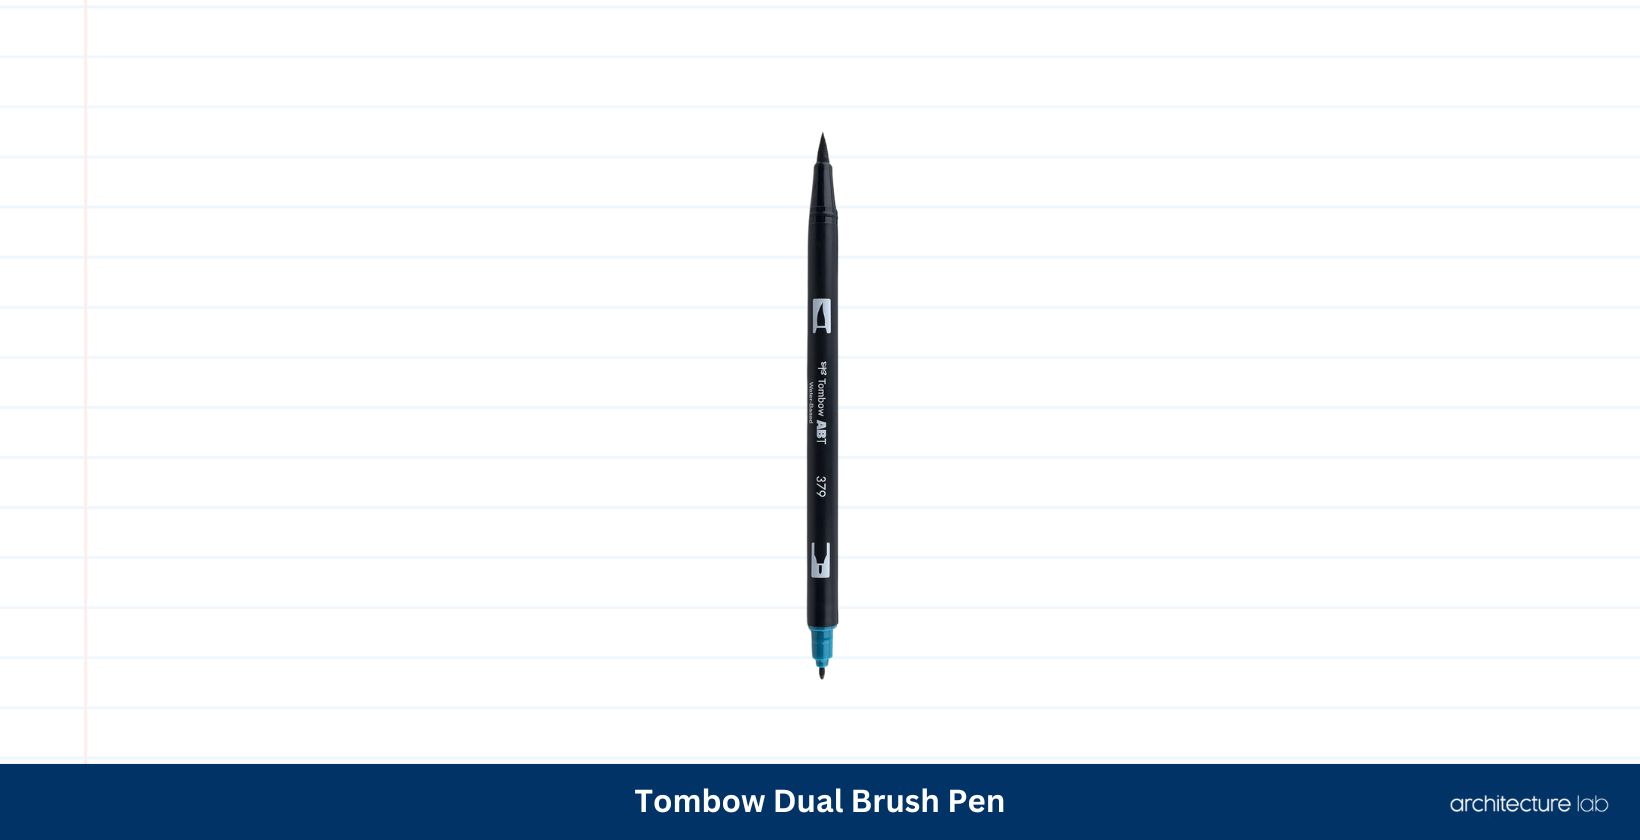 Tombow dual brush pen